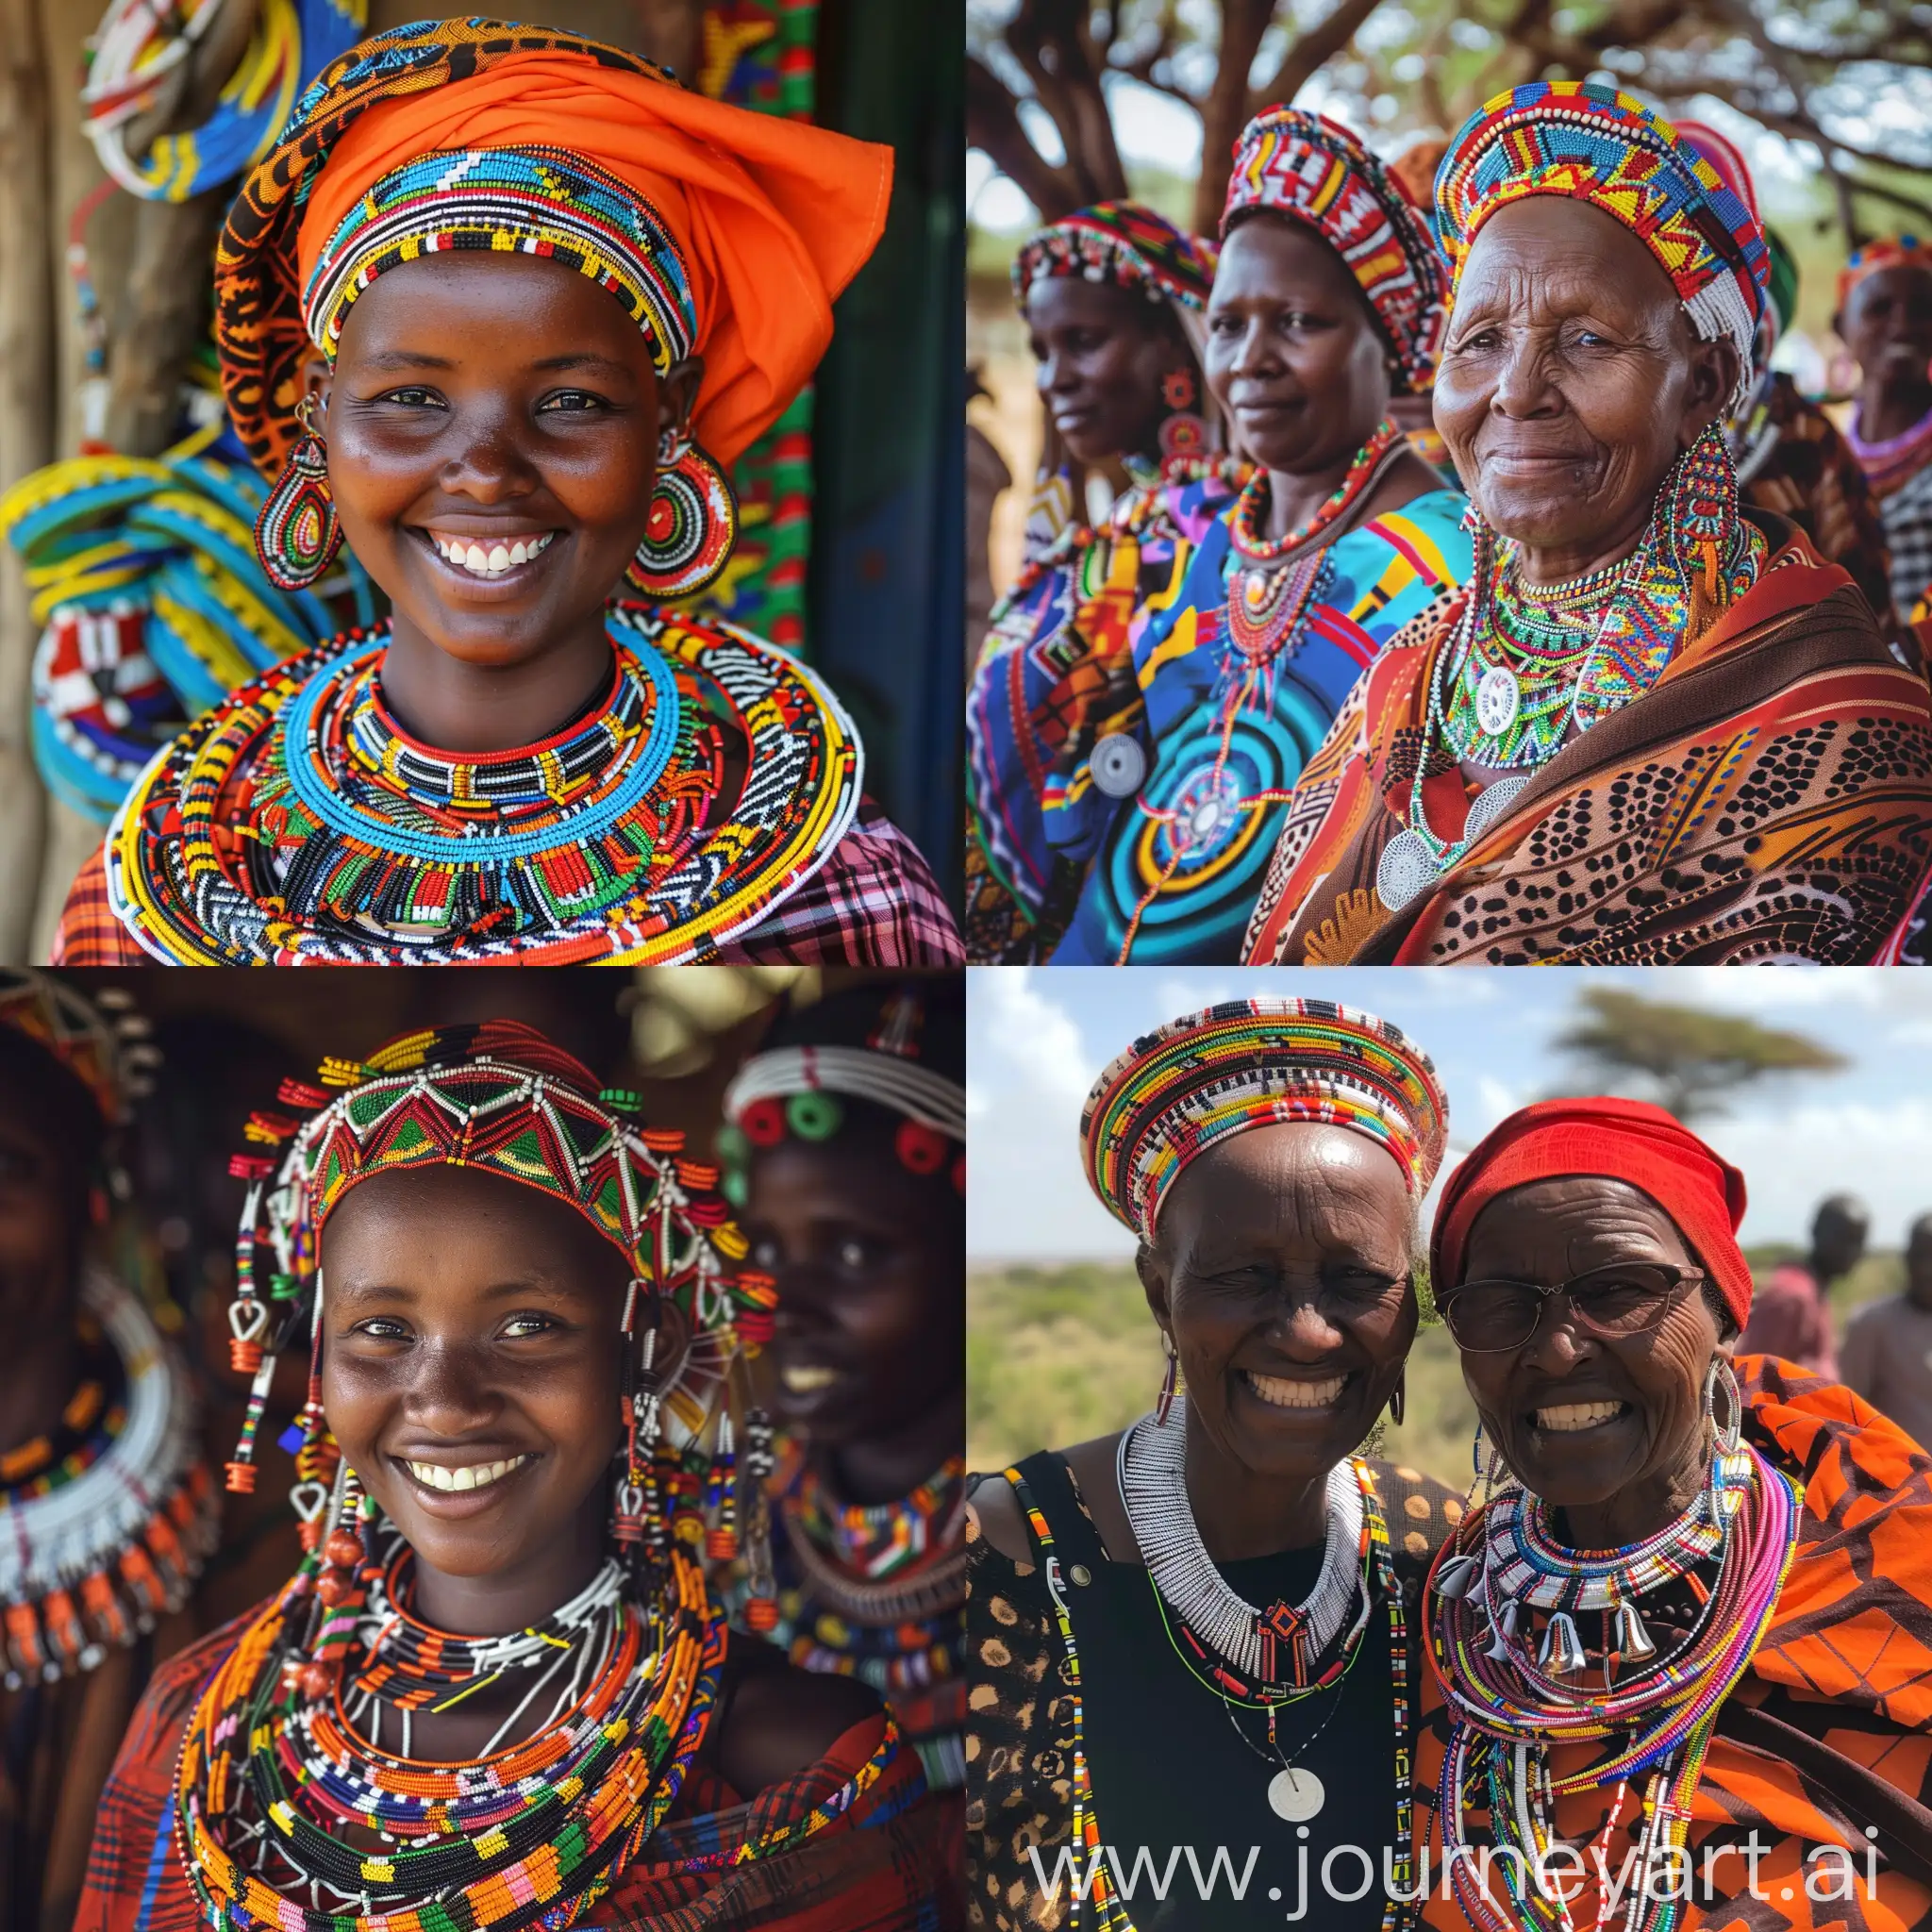 Beautiful people in Kenya

